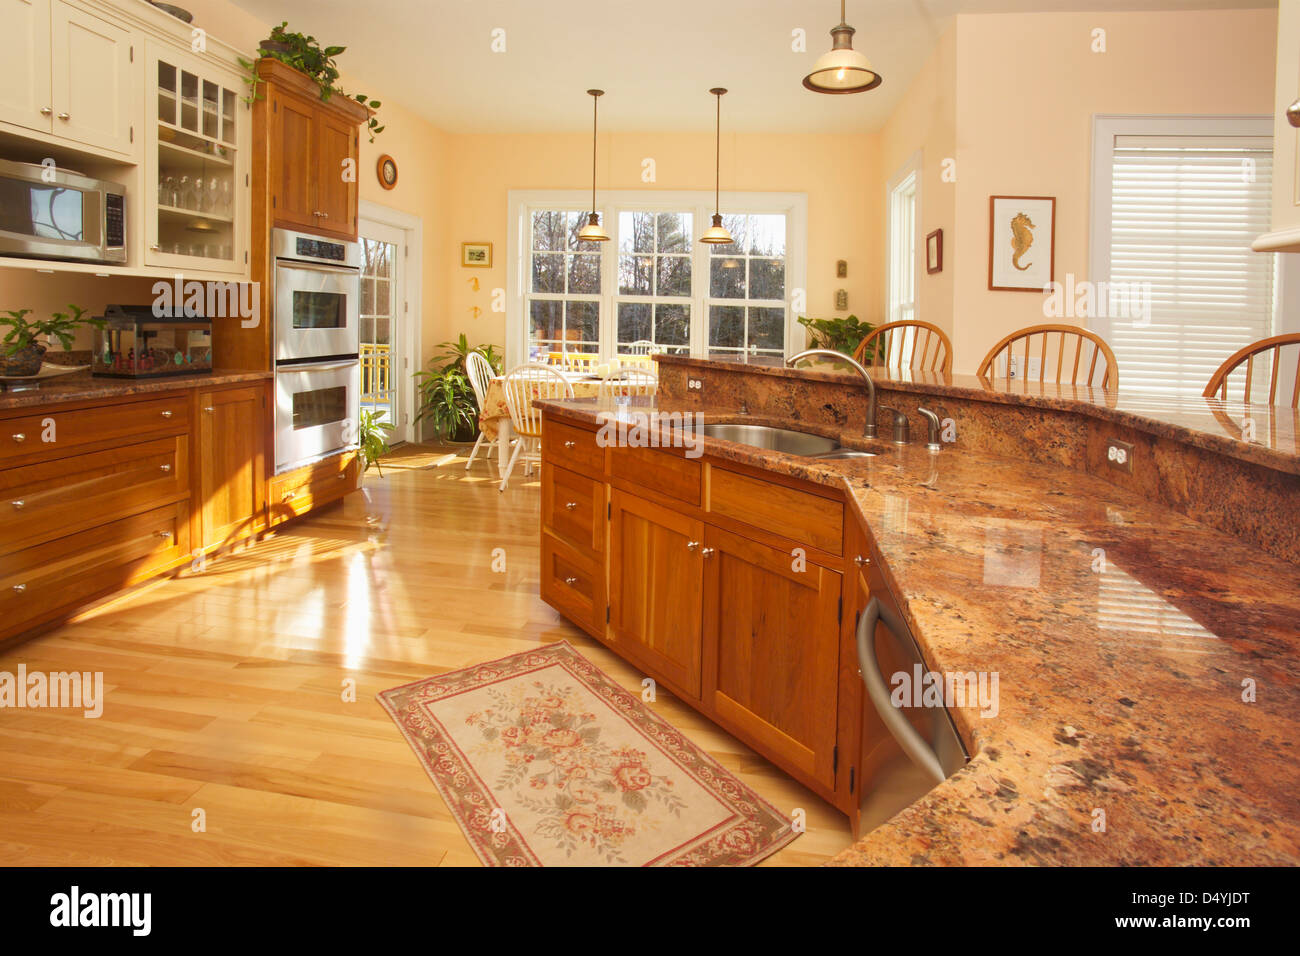 Granite countertop in domestic kitchen with hardwood flooring Stock Photo